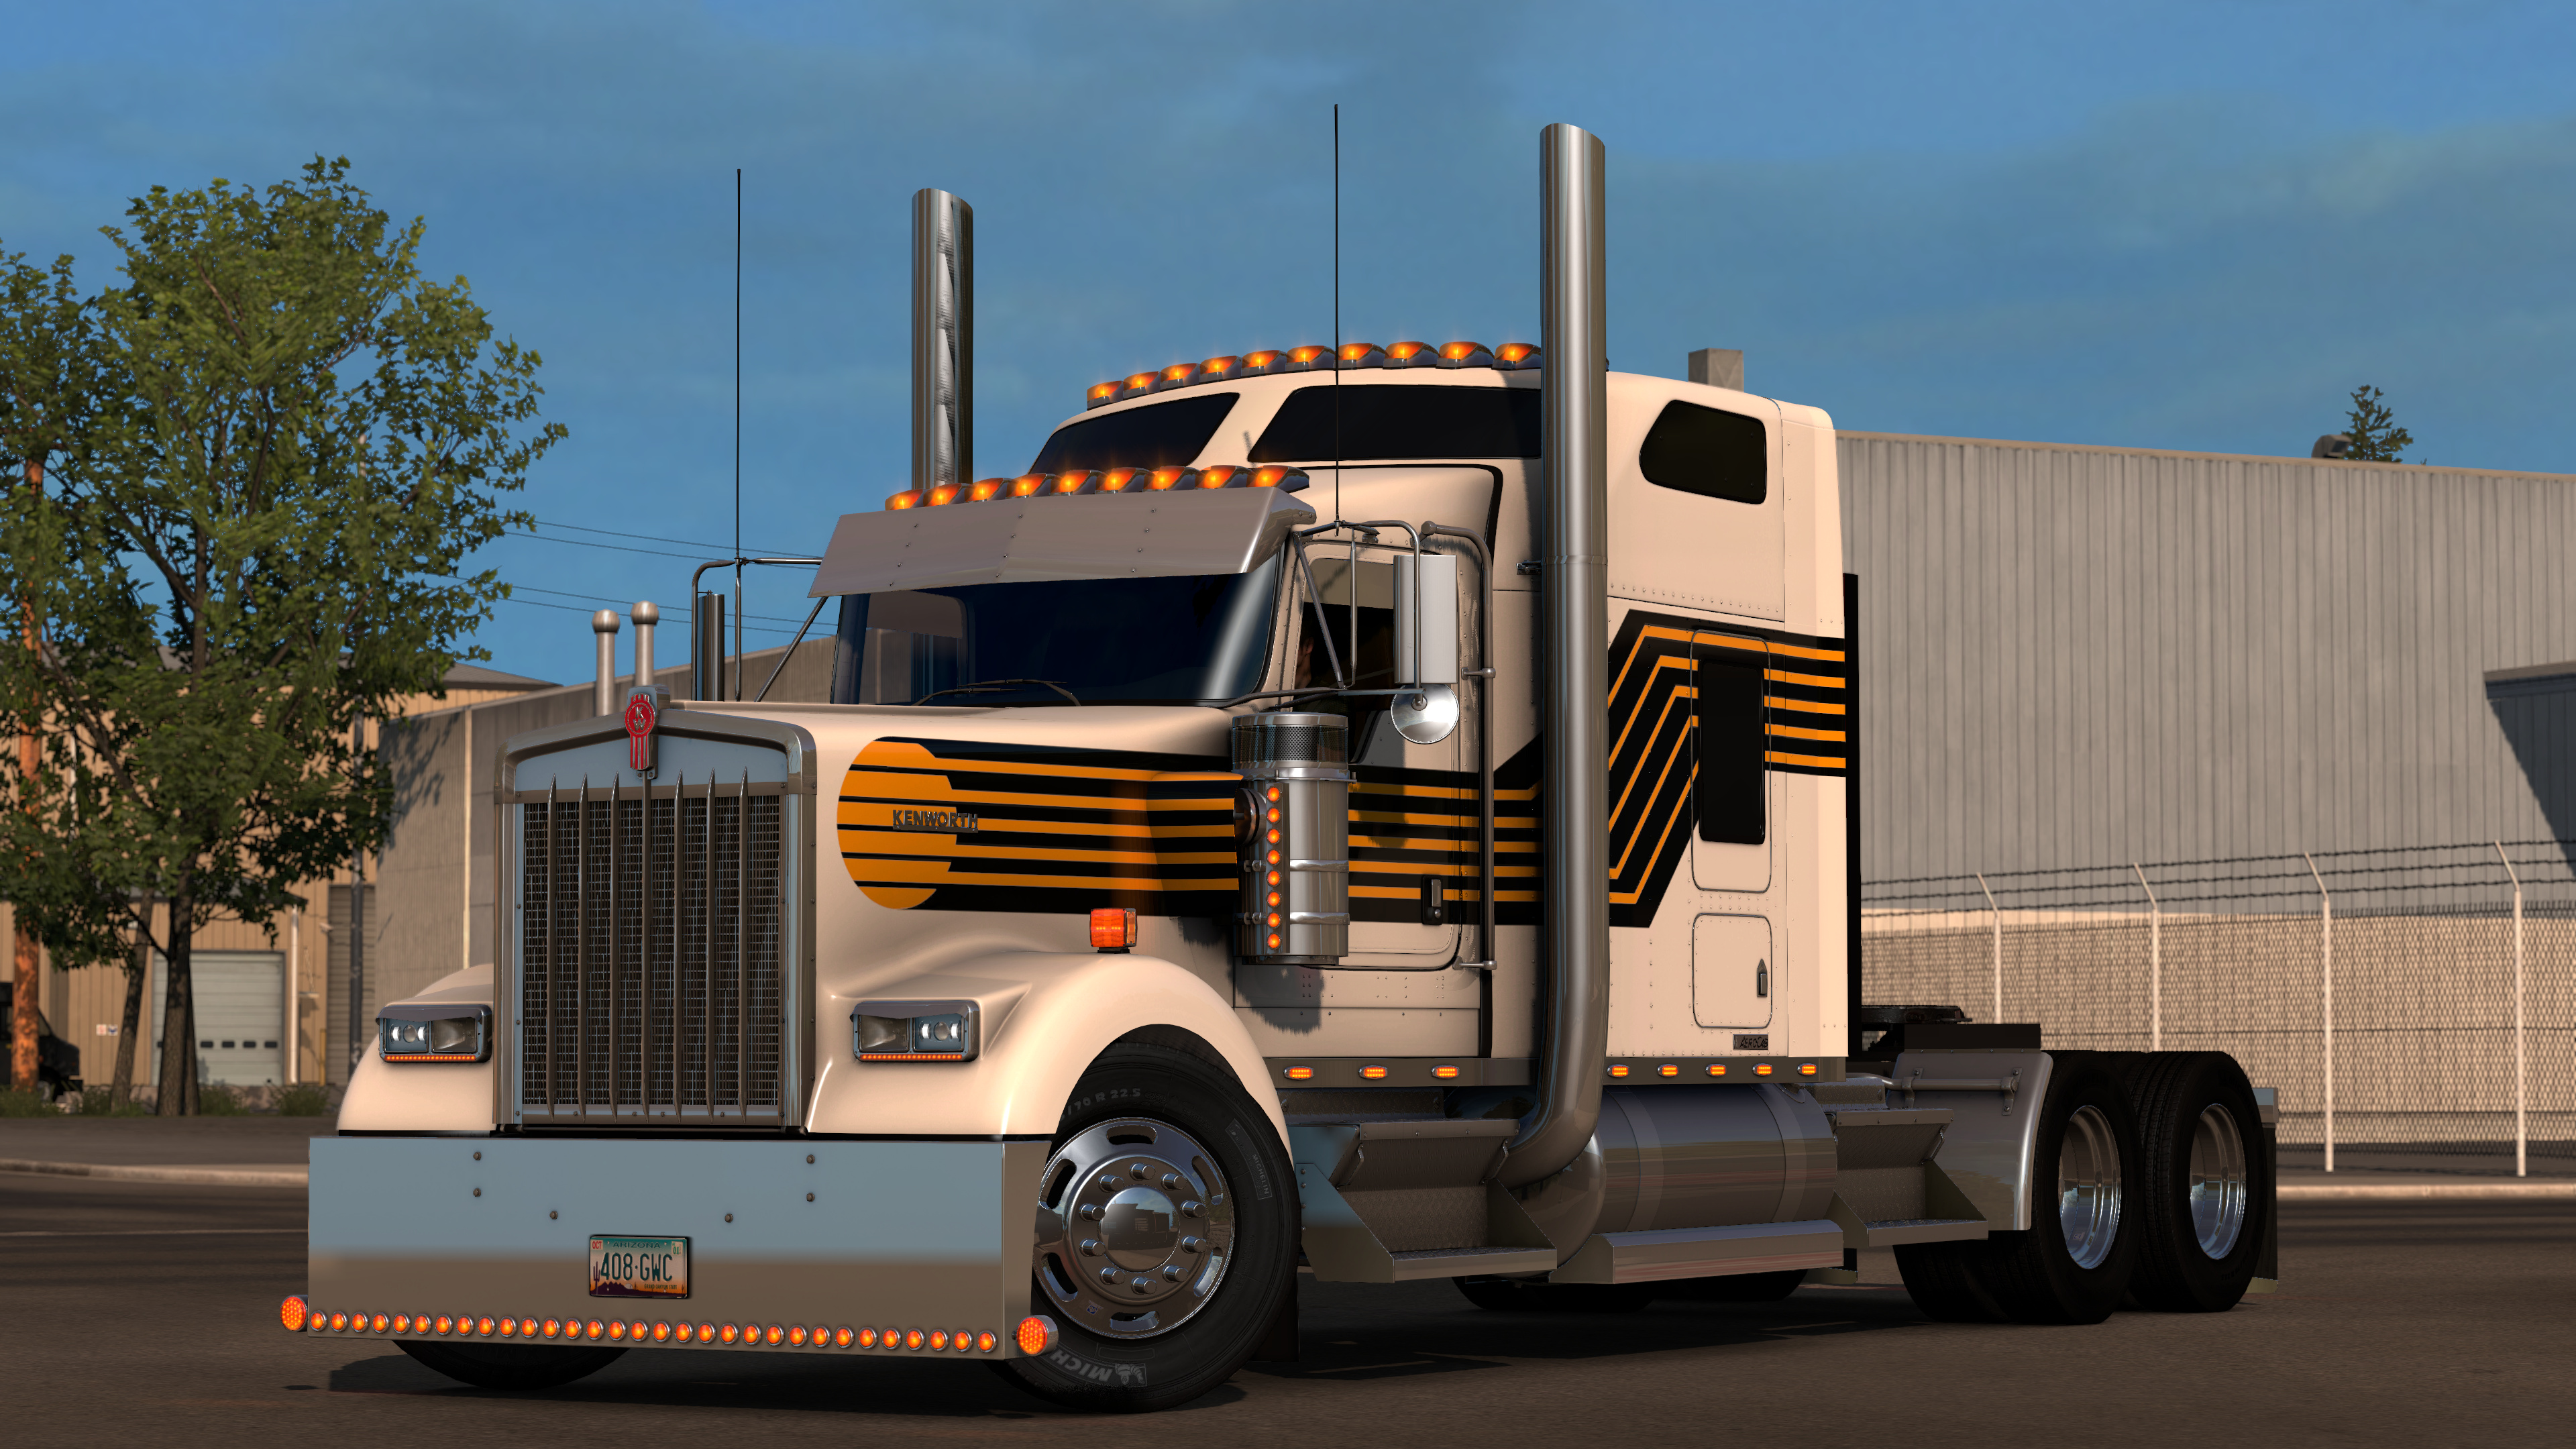 Personalized Kenworth, Unique truck style, Custom modifications, Trucking pride, 3840x2160 4K Desktop